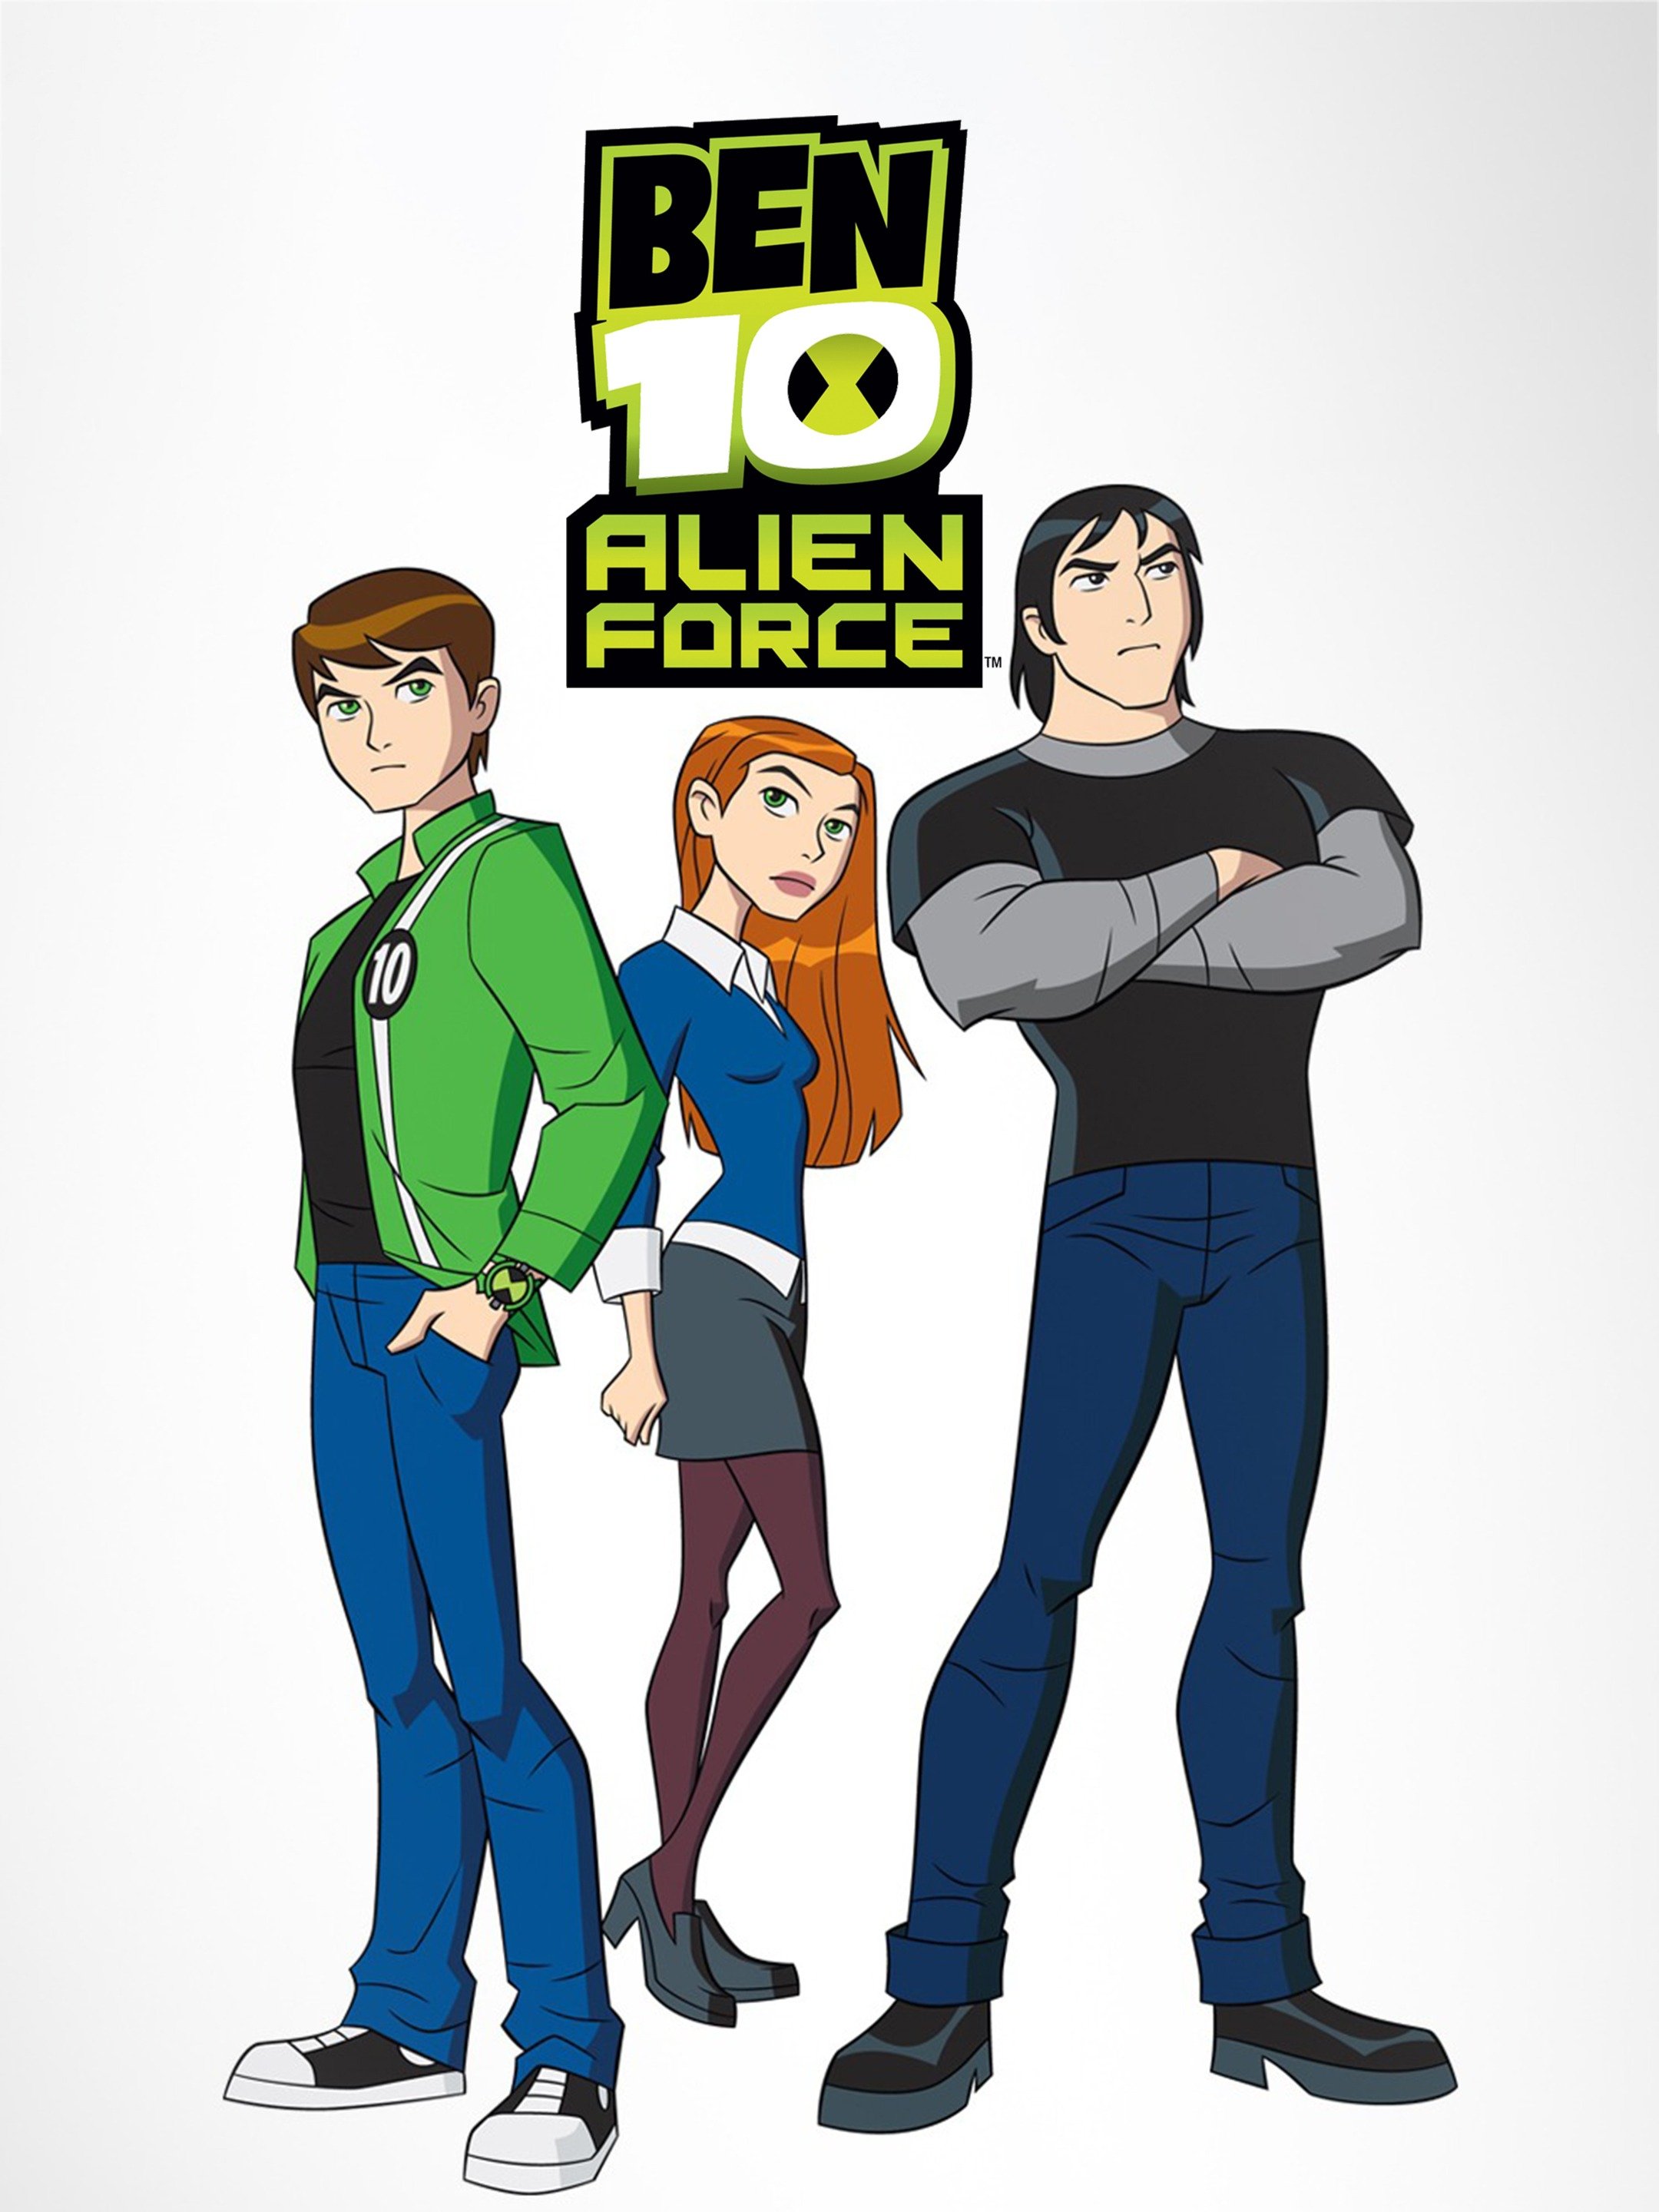 English episodes 2022 ben dating 10 force best alien in download 